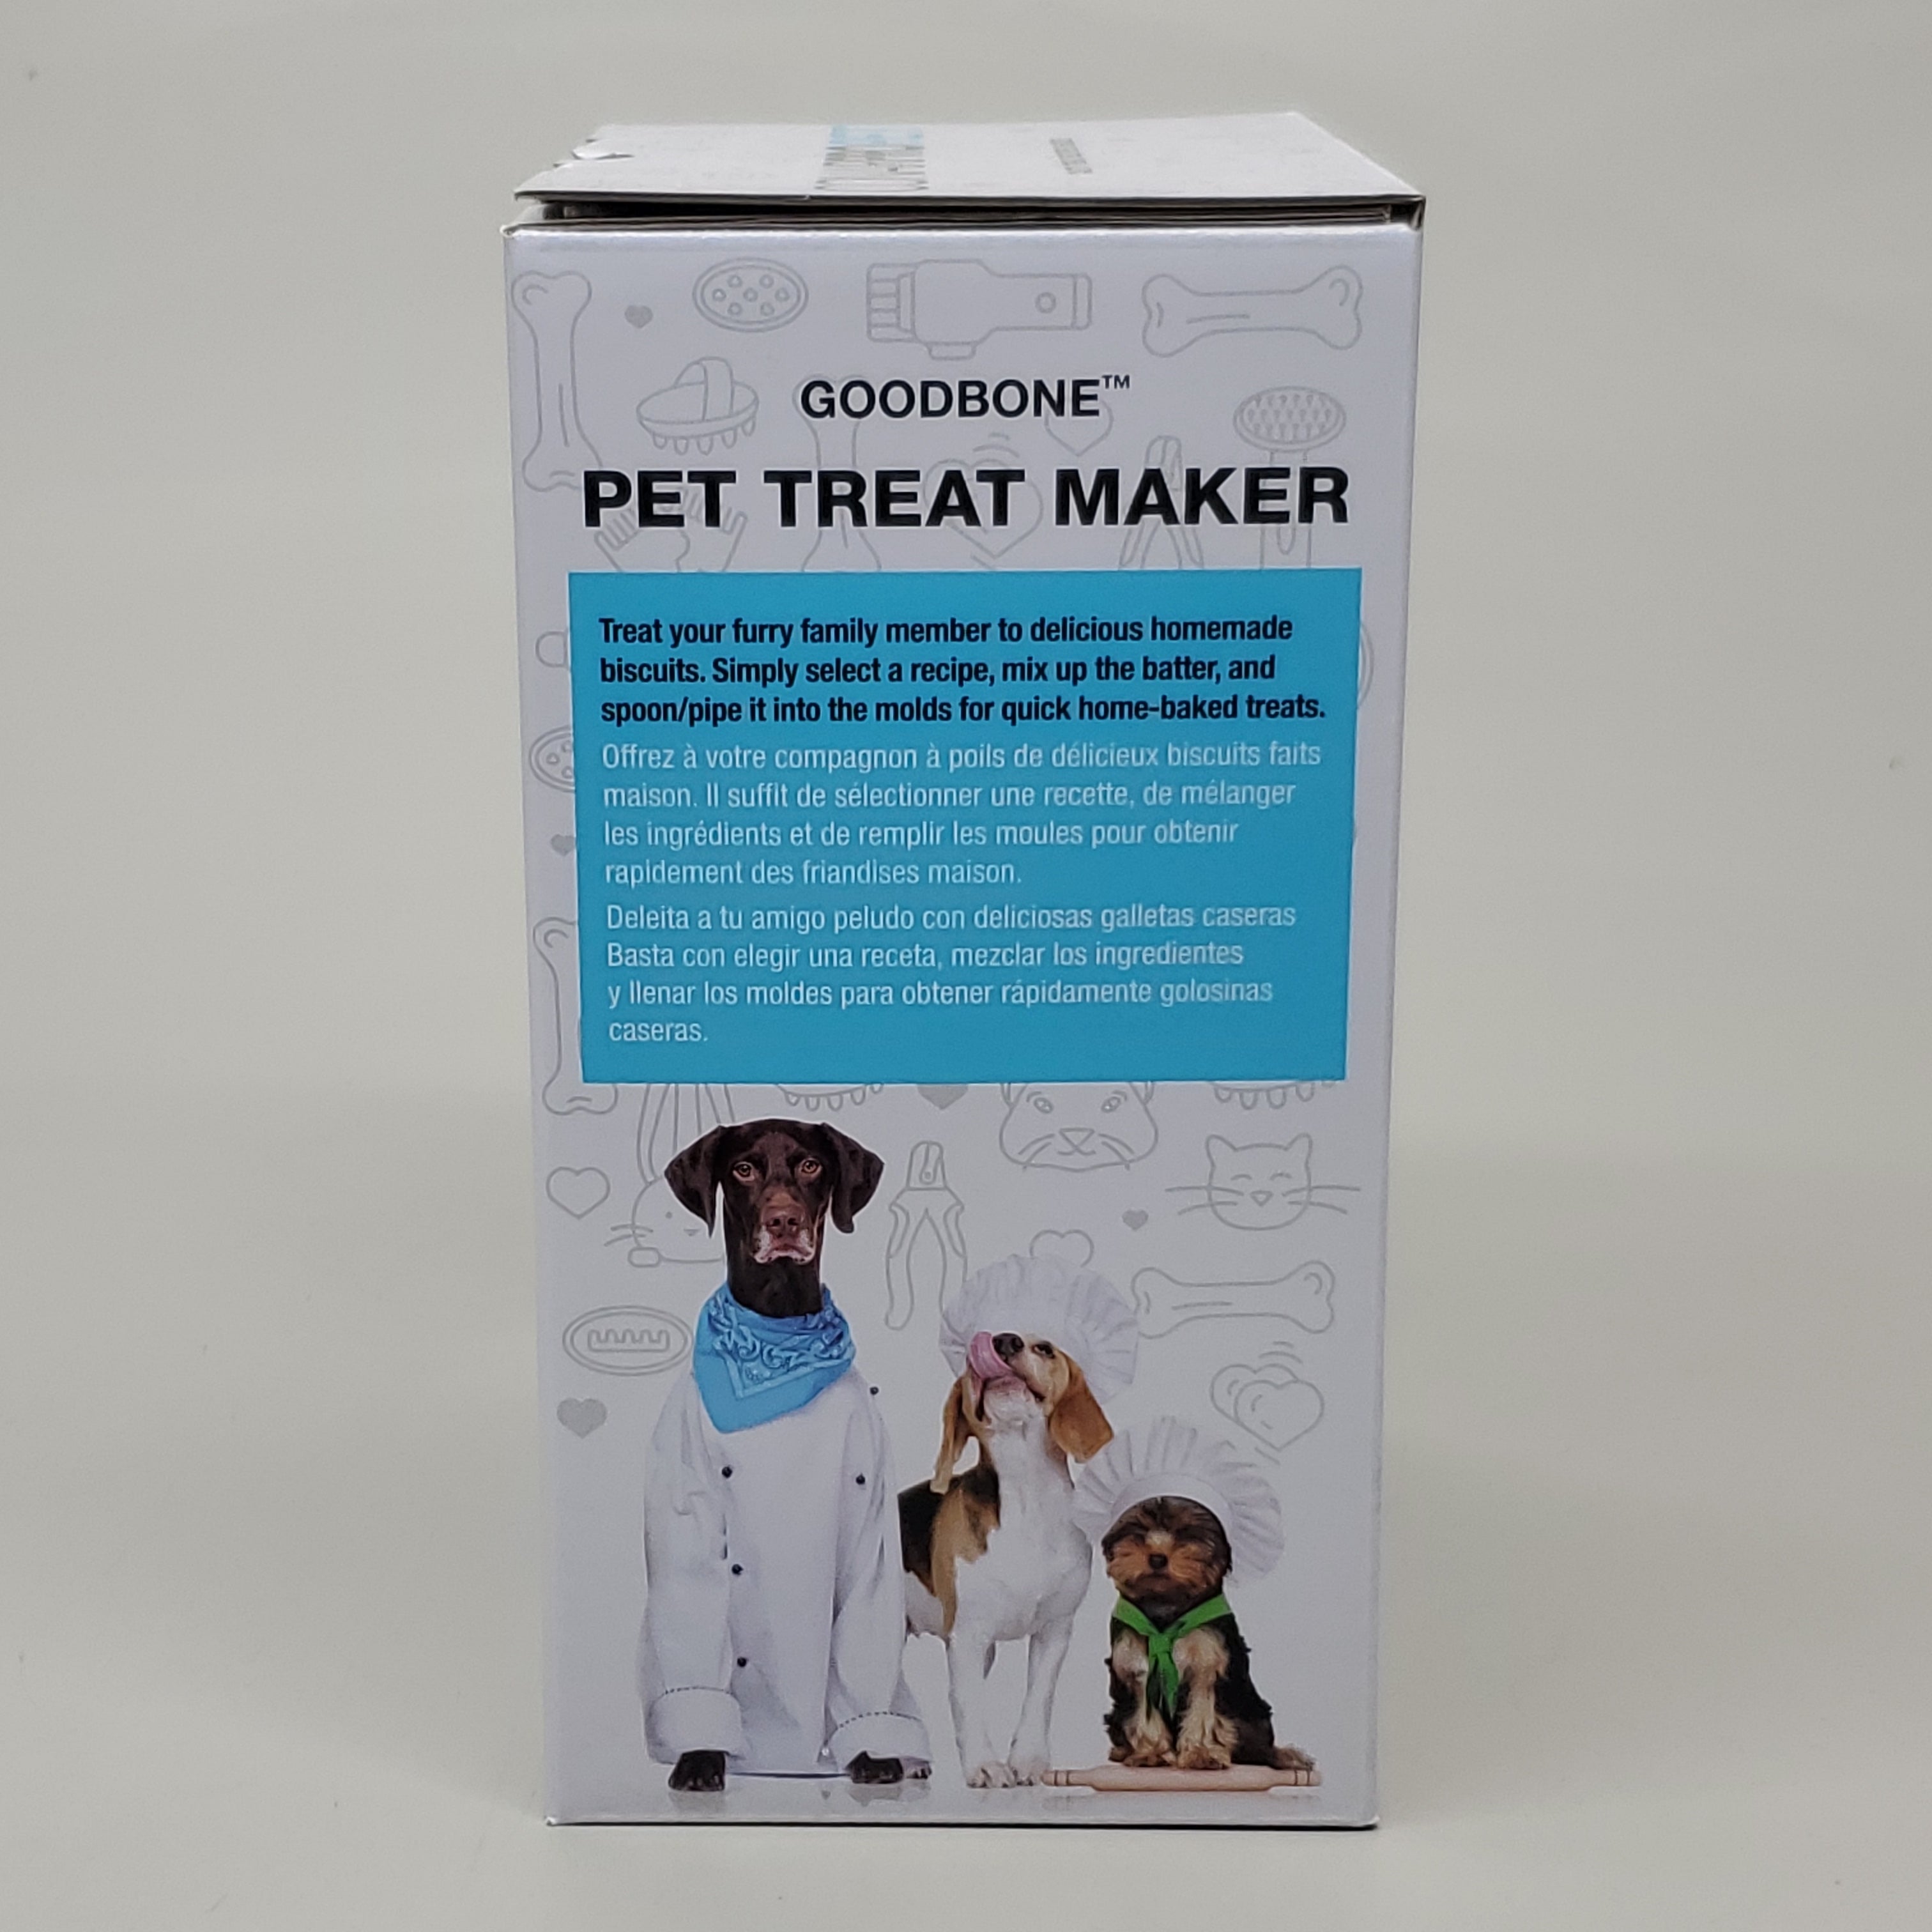 CONAIRPRO PET Goodbone Pet Treat Maker w/Cuisine Recipe Book Green V22568